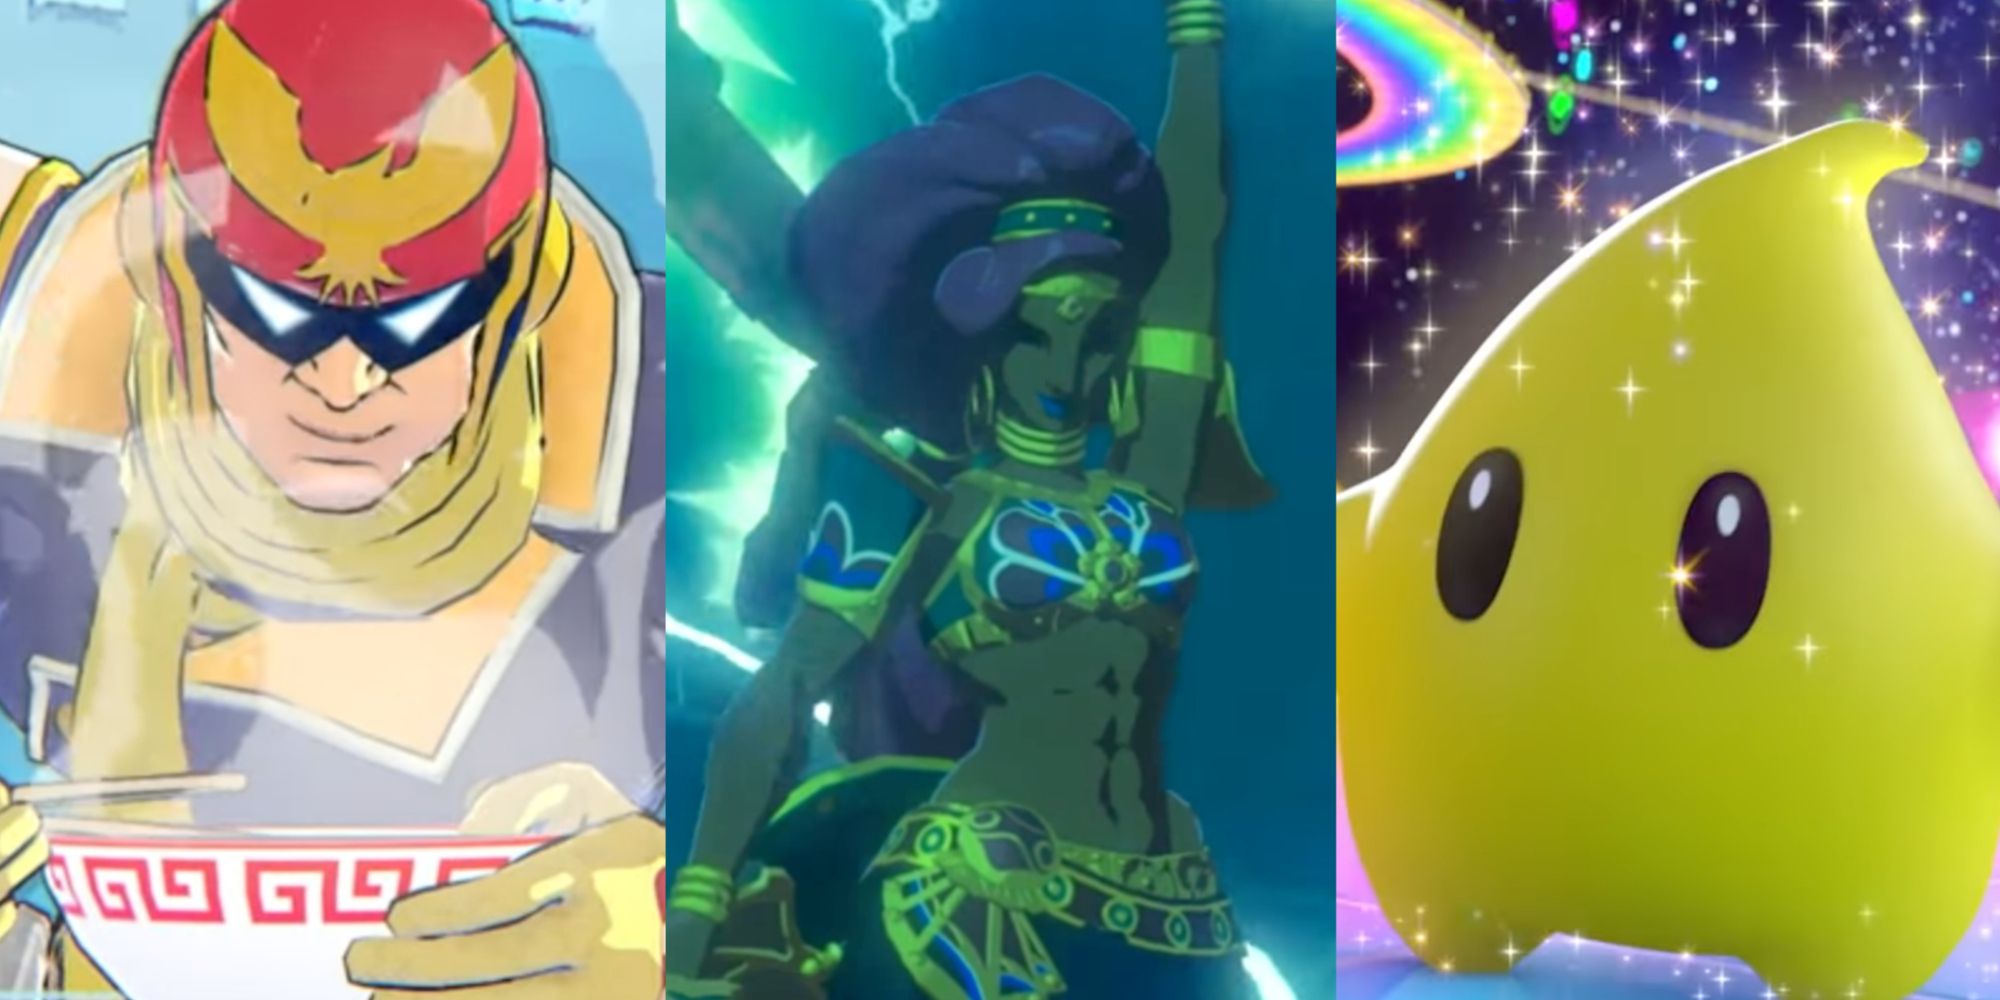 Captain Falcon from F-Zero, Urbosa from The Legend of Zelda: Breath of the Wild, and Luma from Super Mario Galaxy